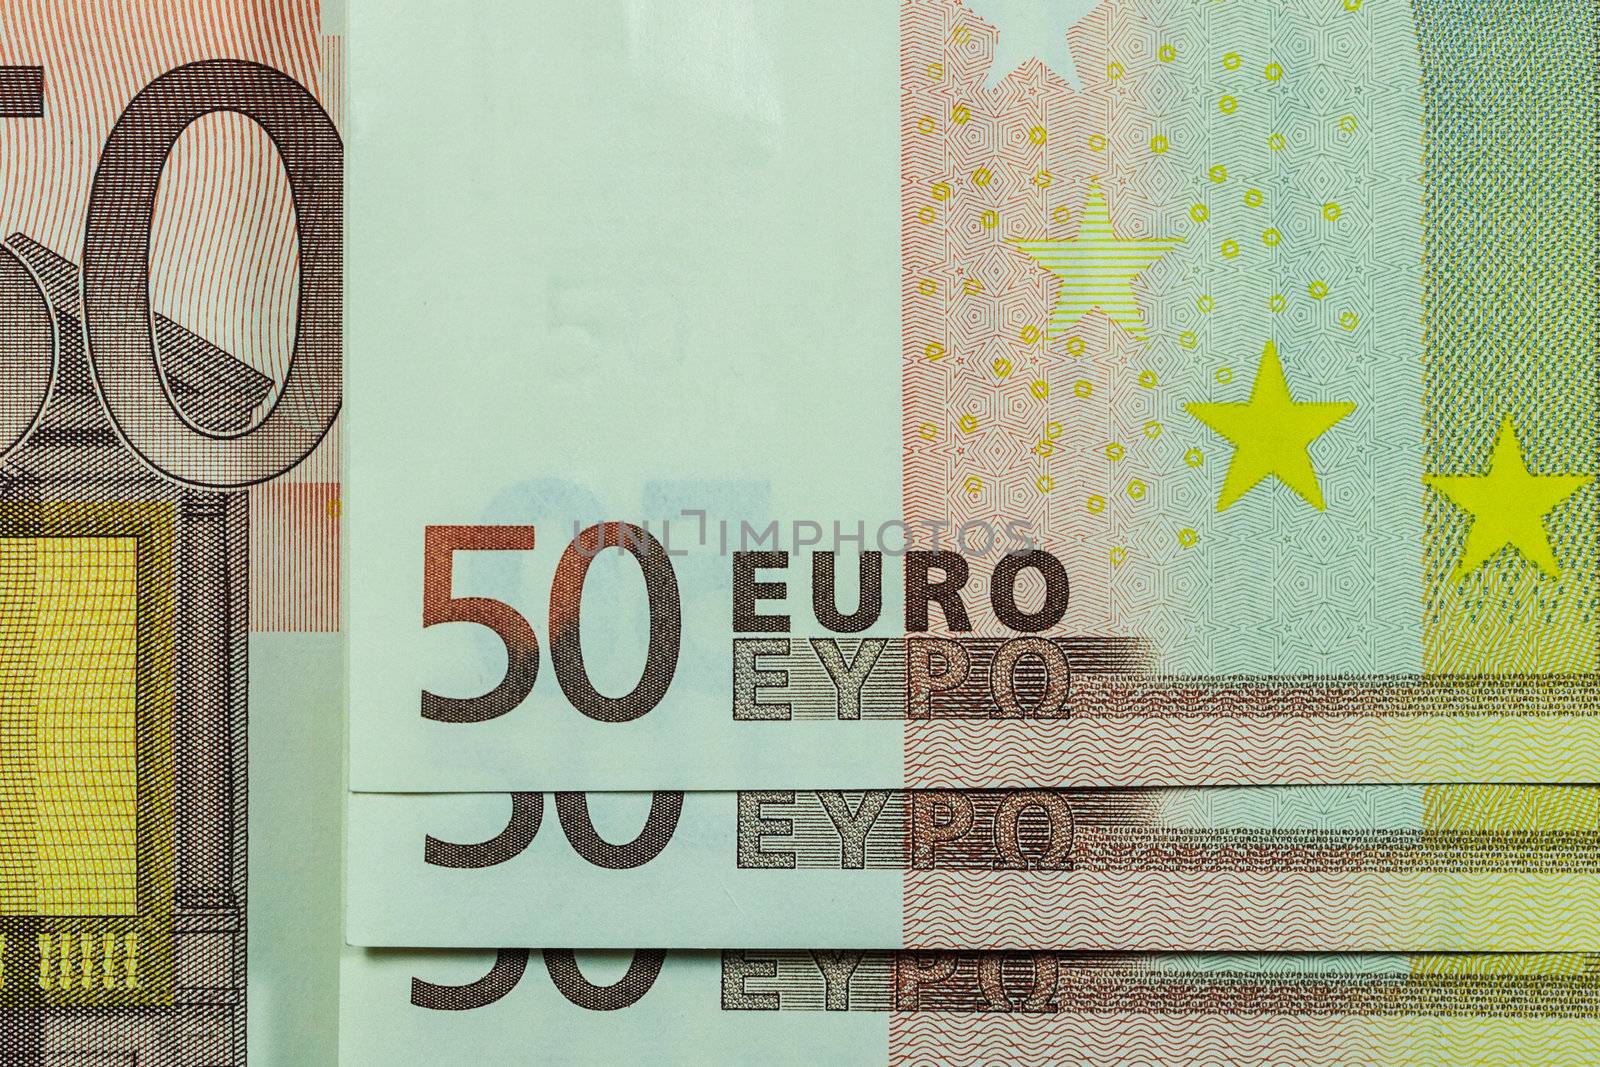 50 Euro Banknote, Macro lens Closeup, Horizontal Pattern